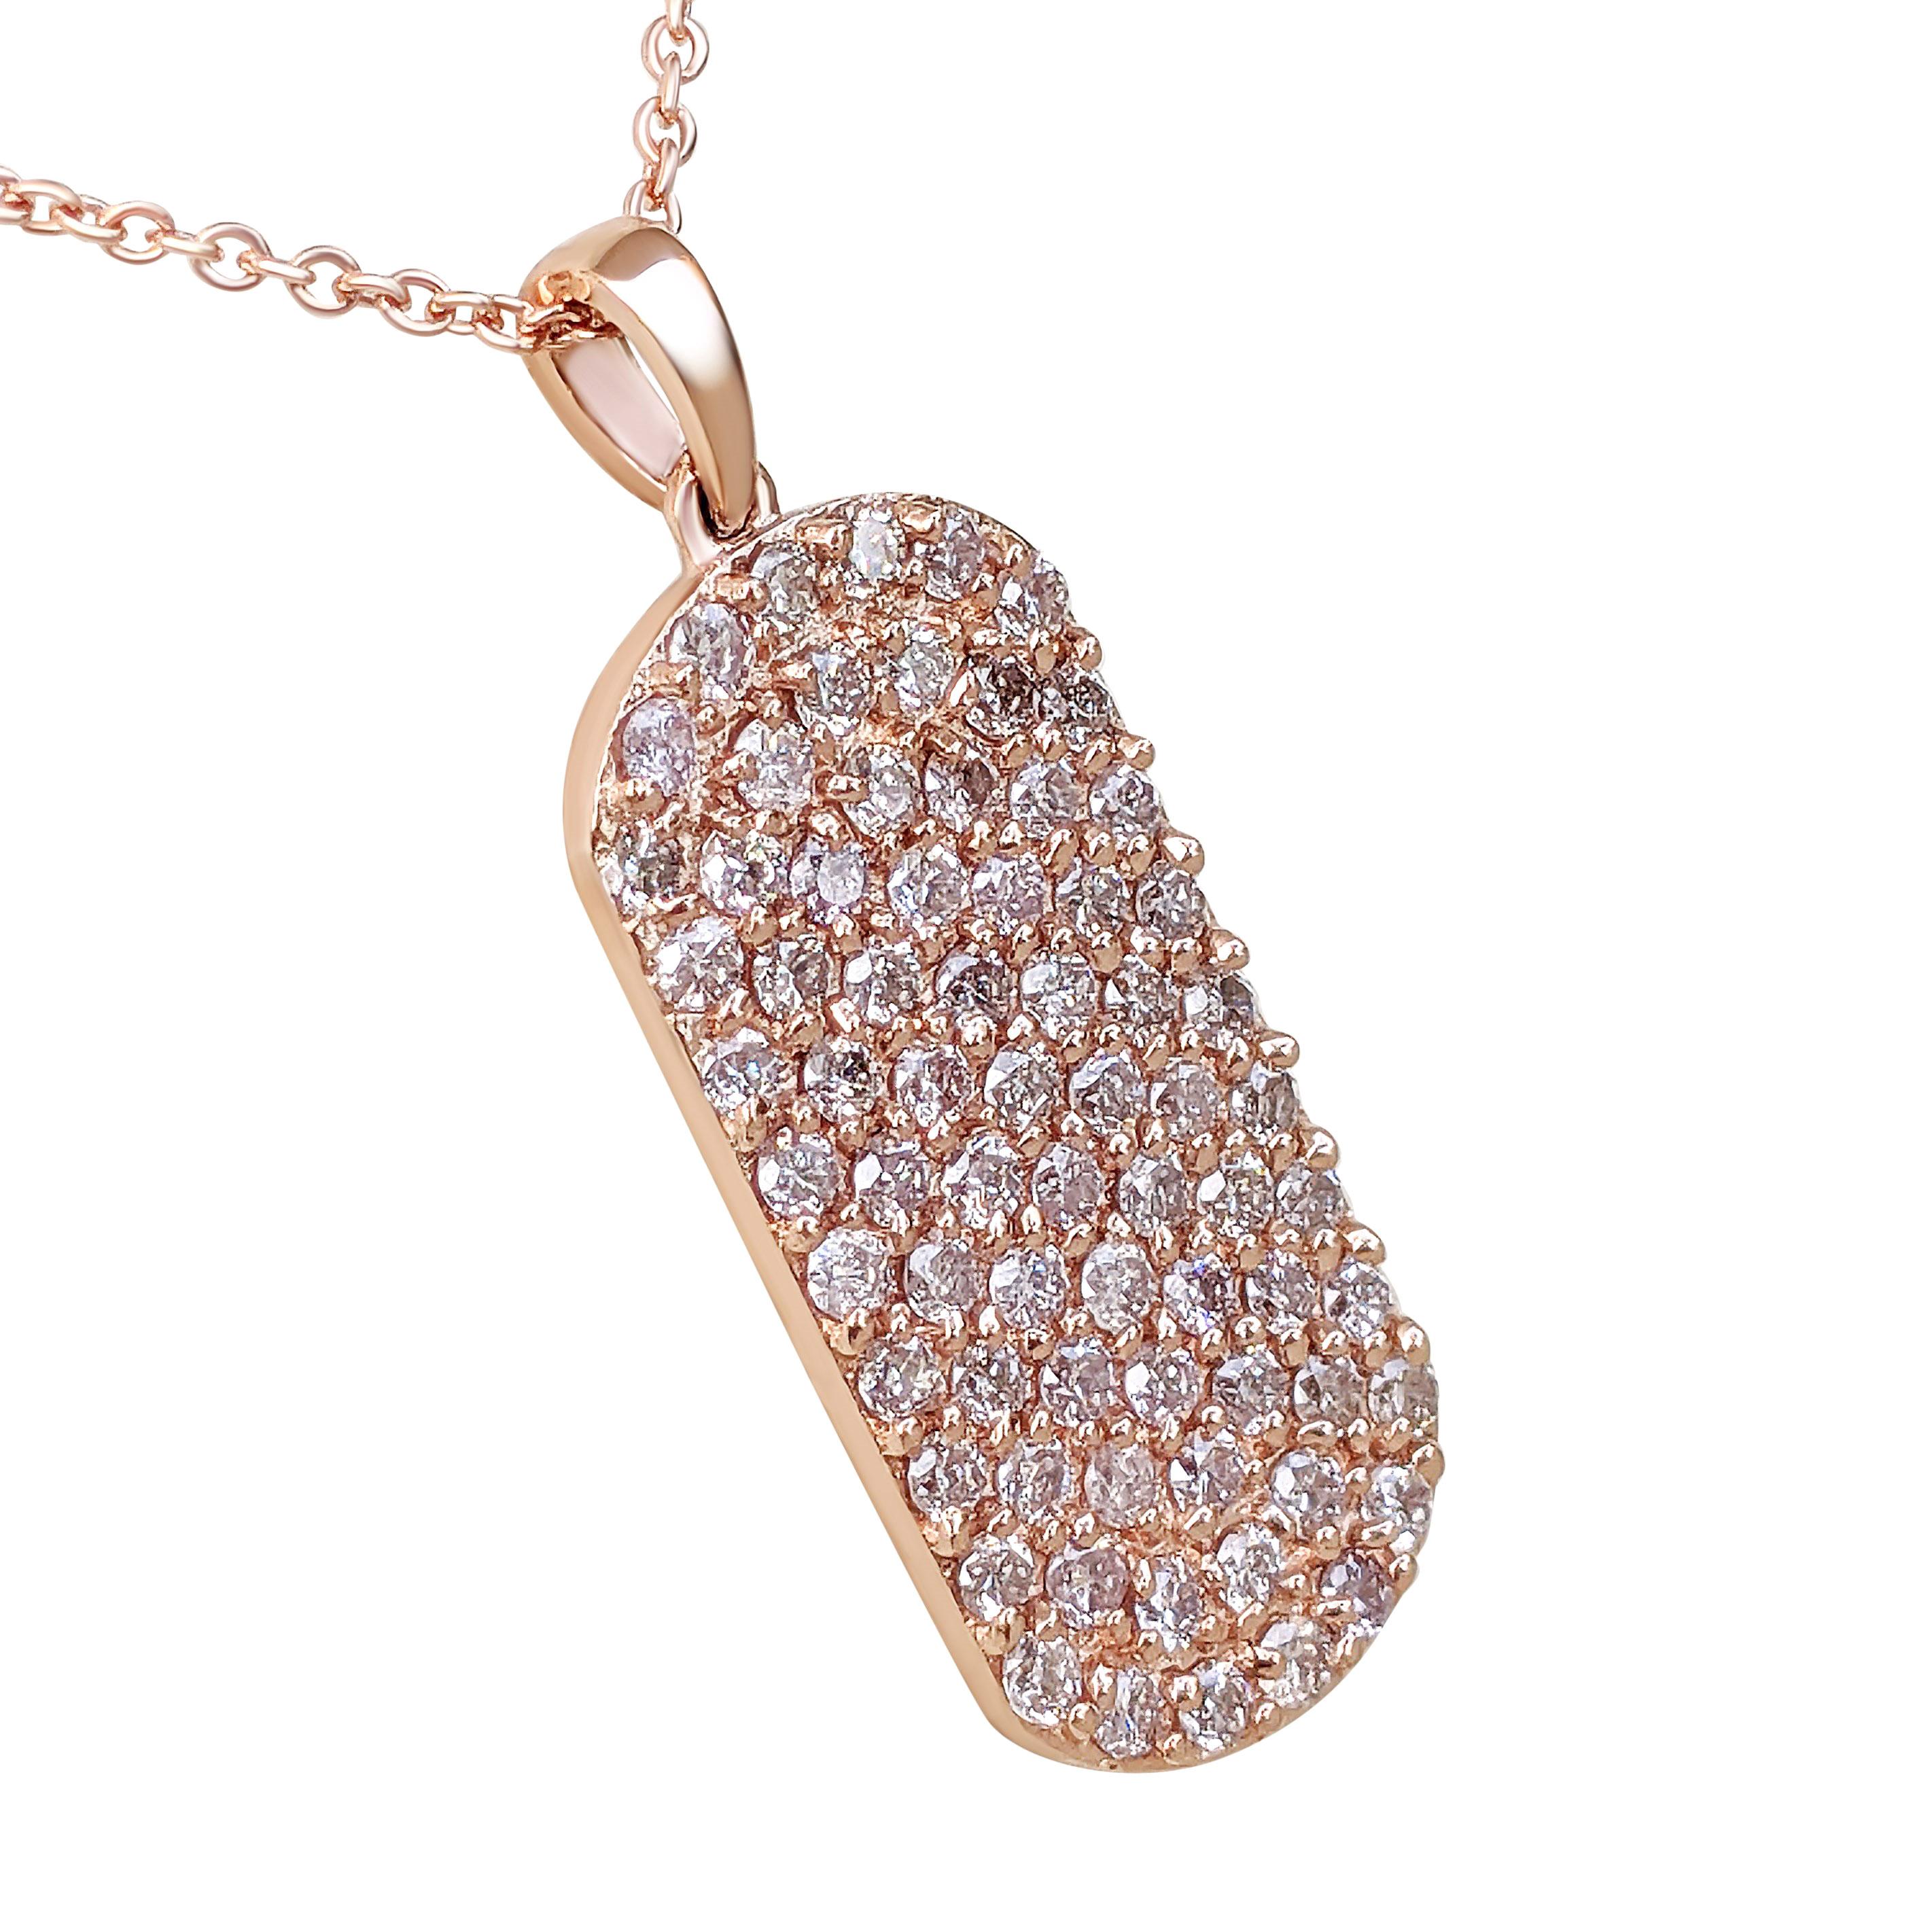 NO RESERVE! 1.10Ct Fancy Pink Diamond 14 kt. Gold Pendant Necklace 1